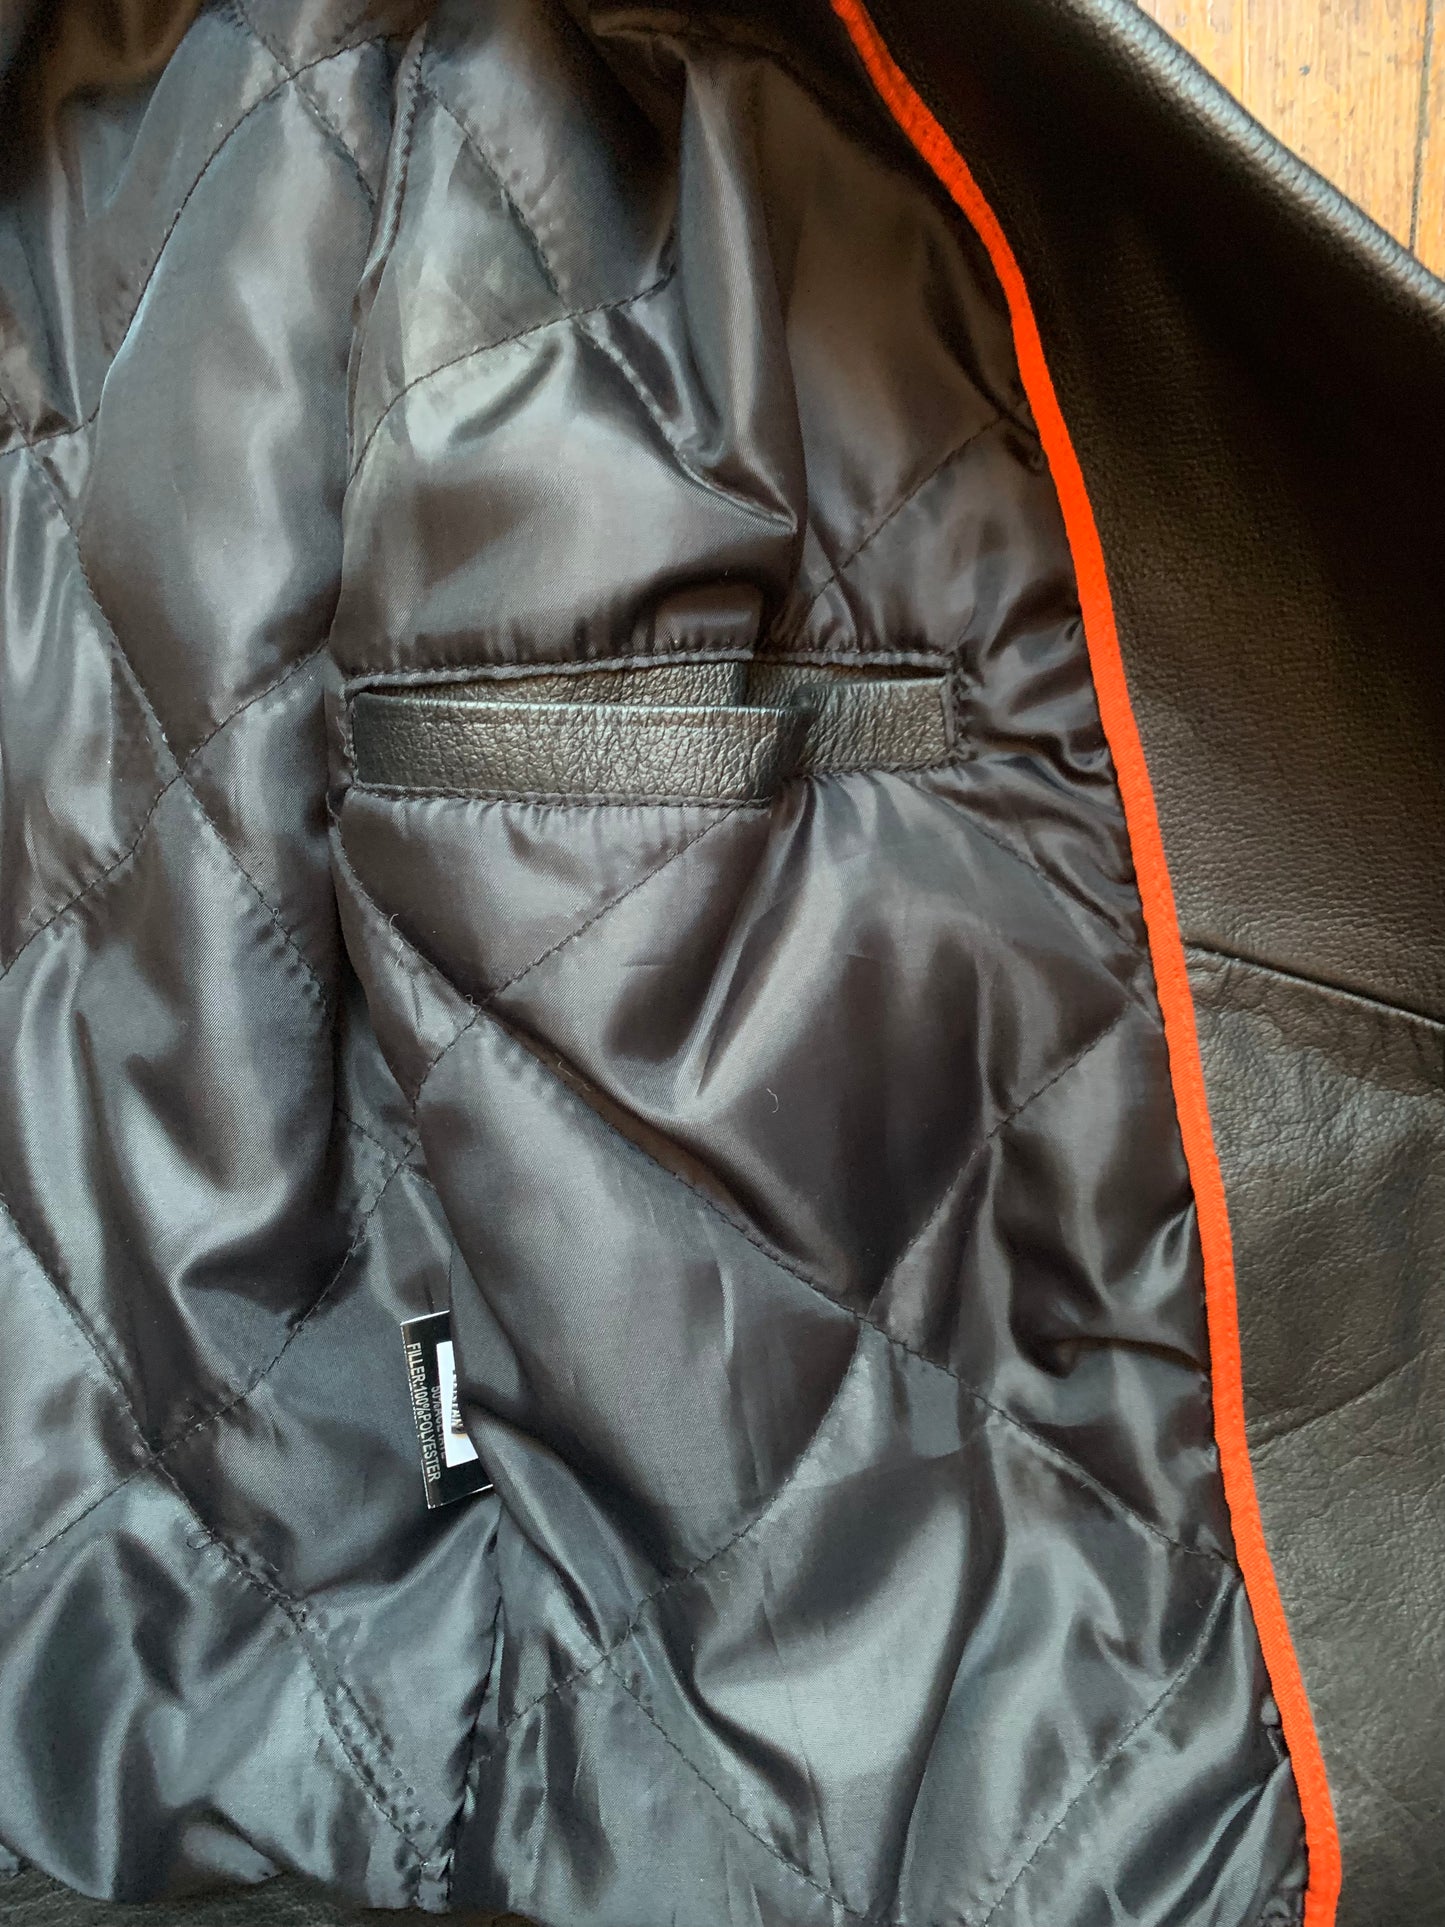 Vintage Interstate Leather Motocycle Jacket w/ Braid Detail